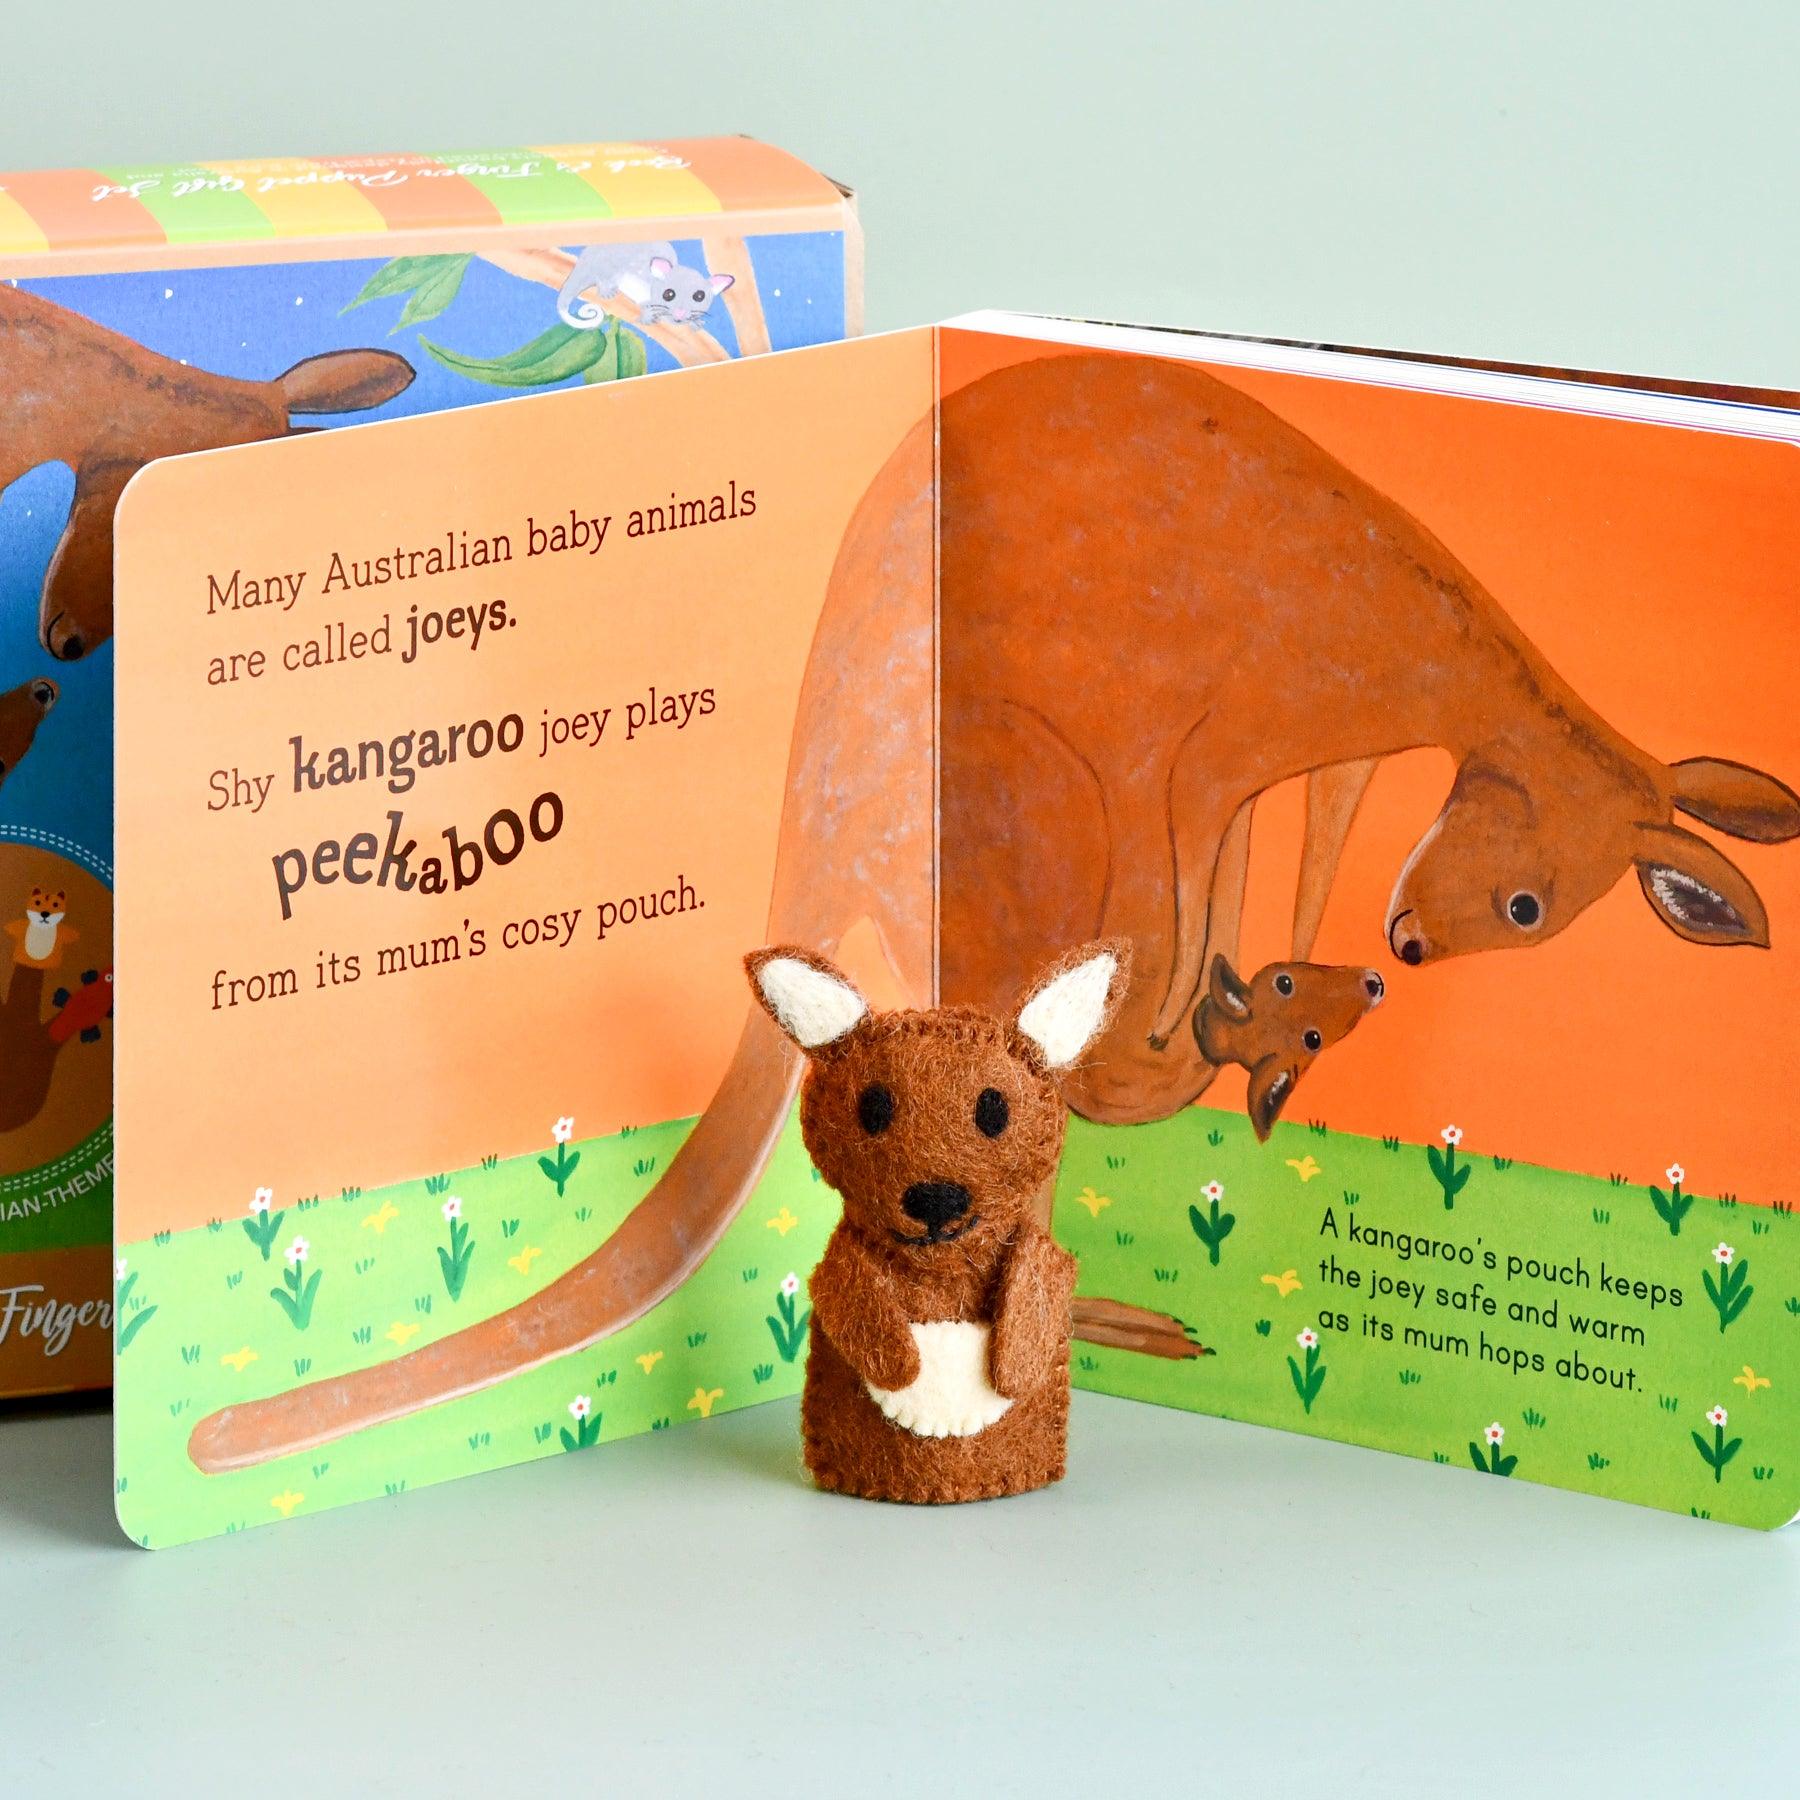 Australian Baby Animals by Frané Lessac - Book and Finger Puppet Set - Tara Treasures